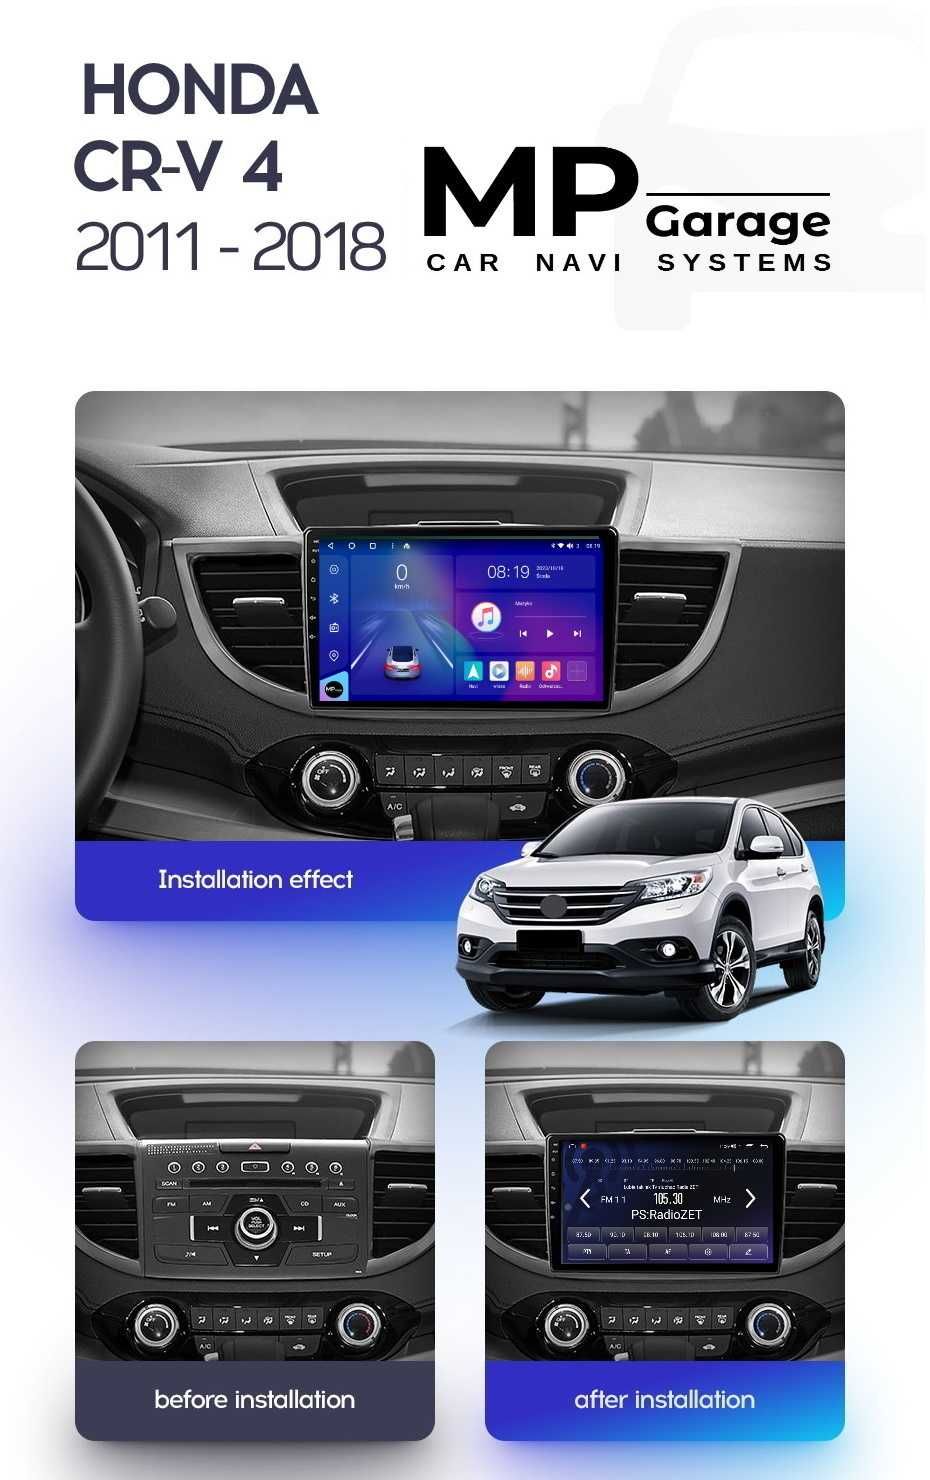 Nawigacja Android Honda CRV 4 2012/2018 4G LTE CarPlay/AA Qled